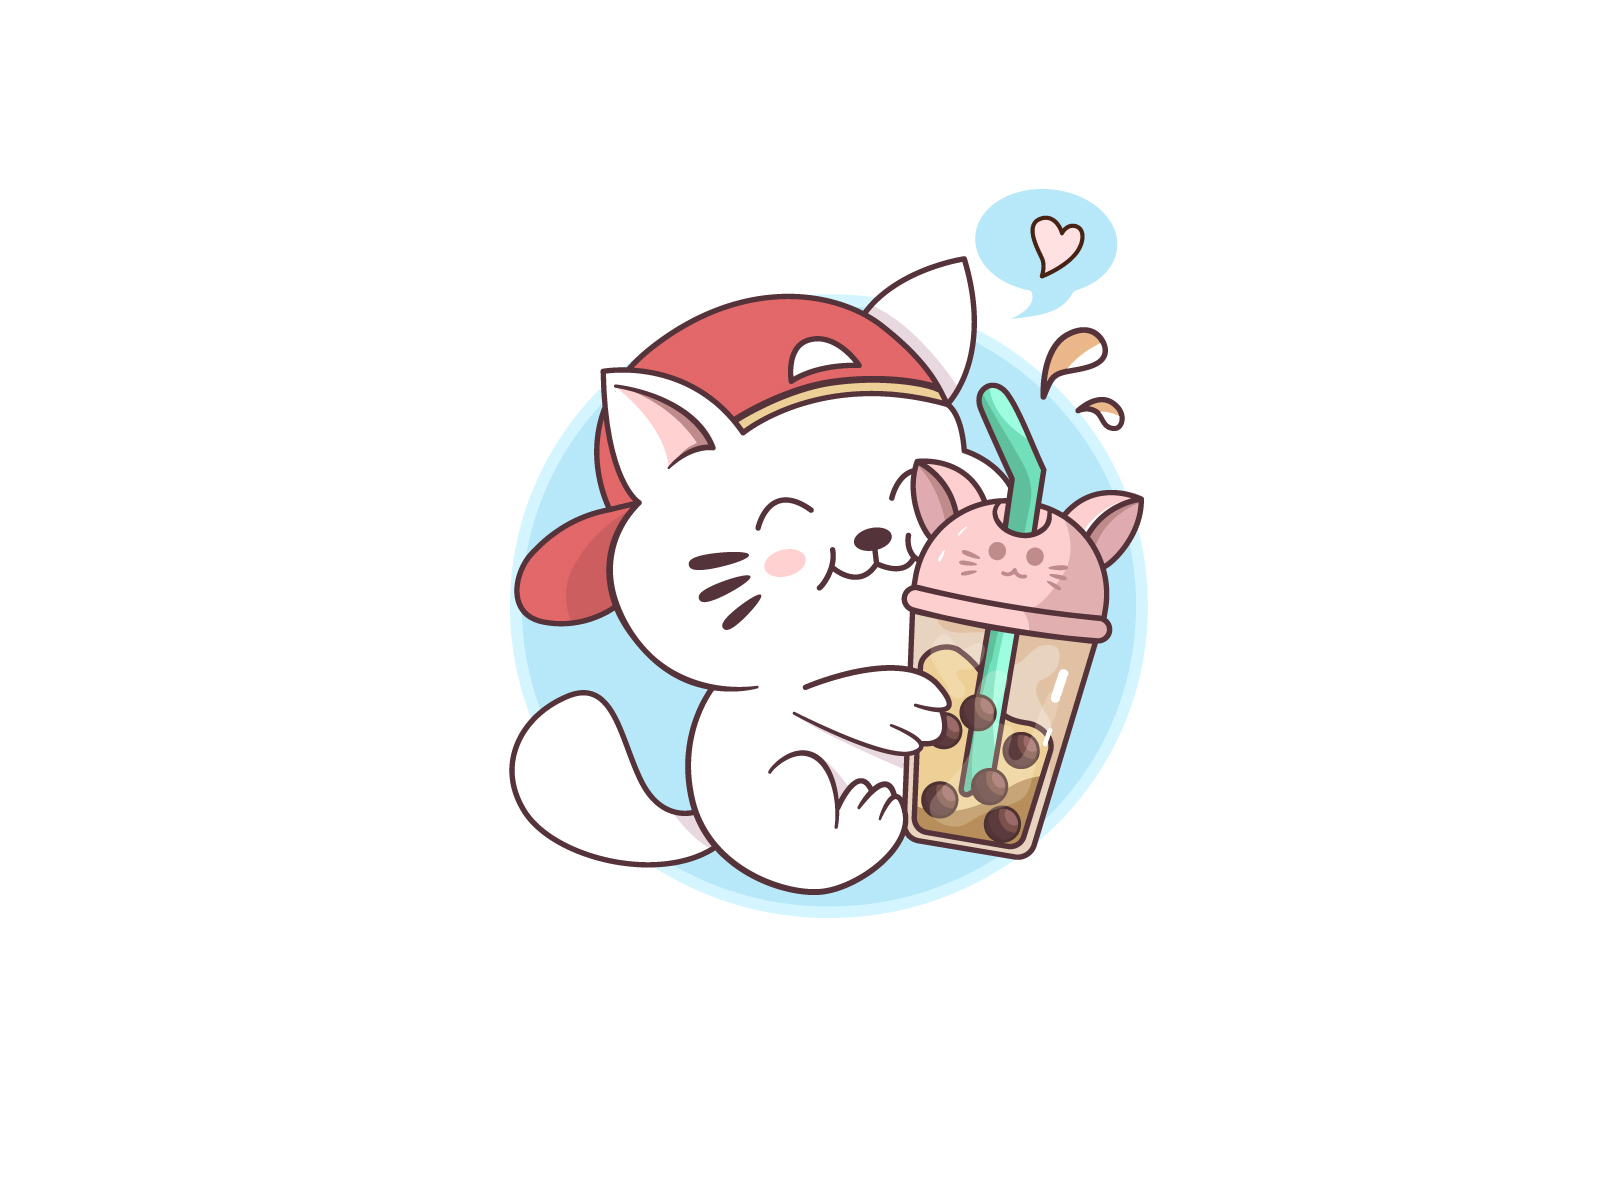 Kawaii Cats Render By Sweetkawaiilove On Deviantart  Anime Kitten   1024x777 PNG Download  PNGkit